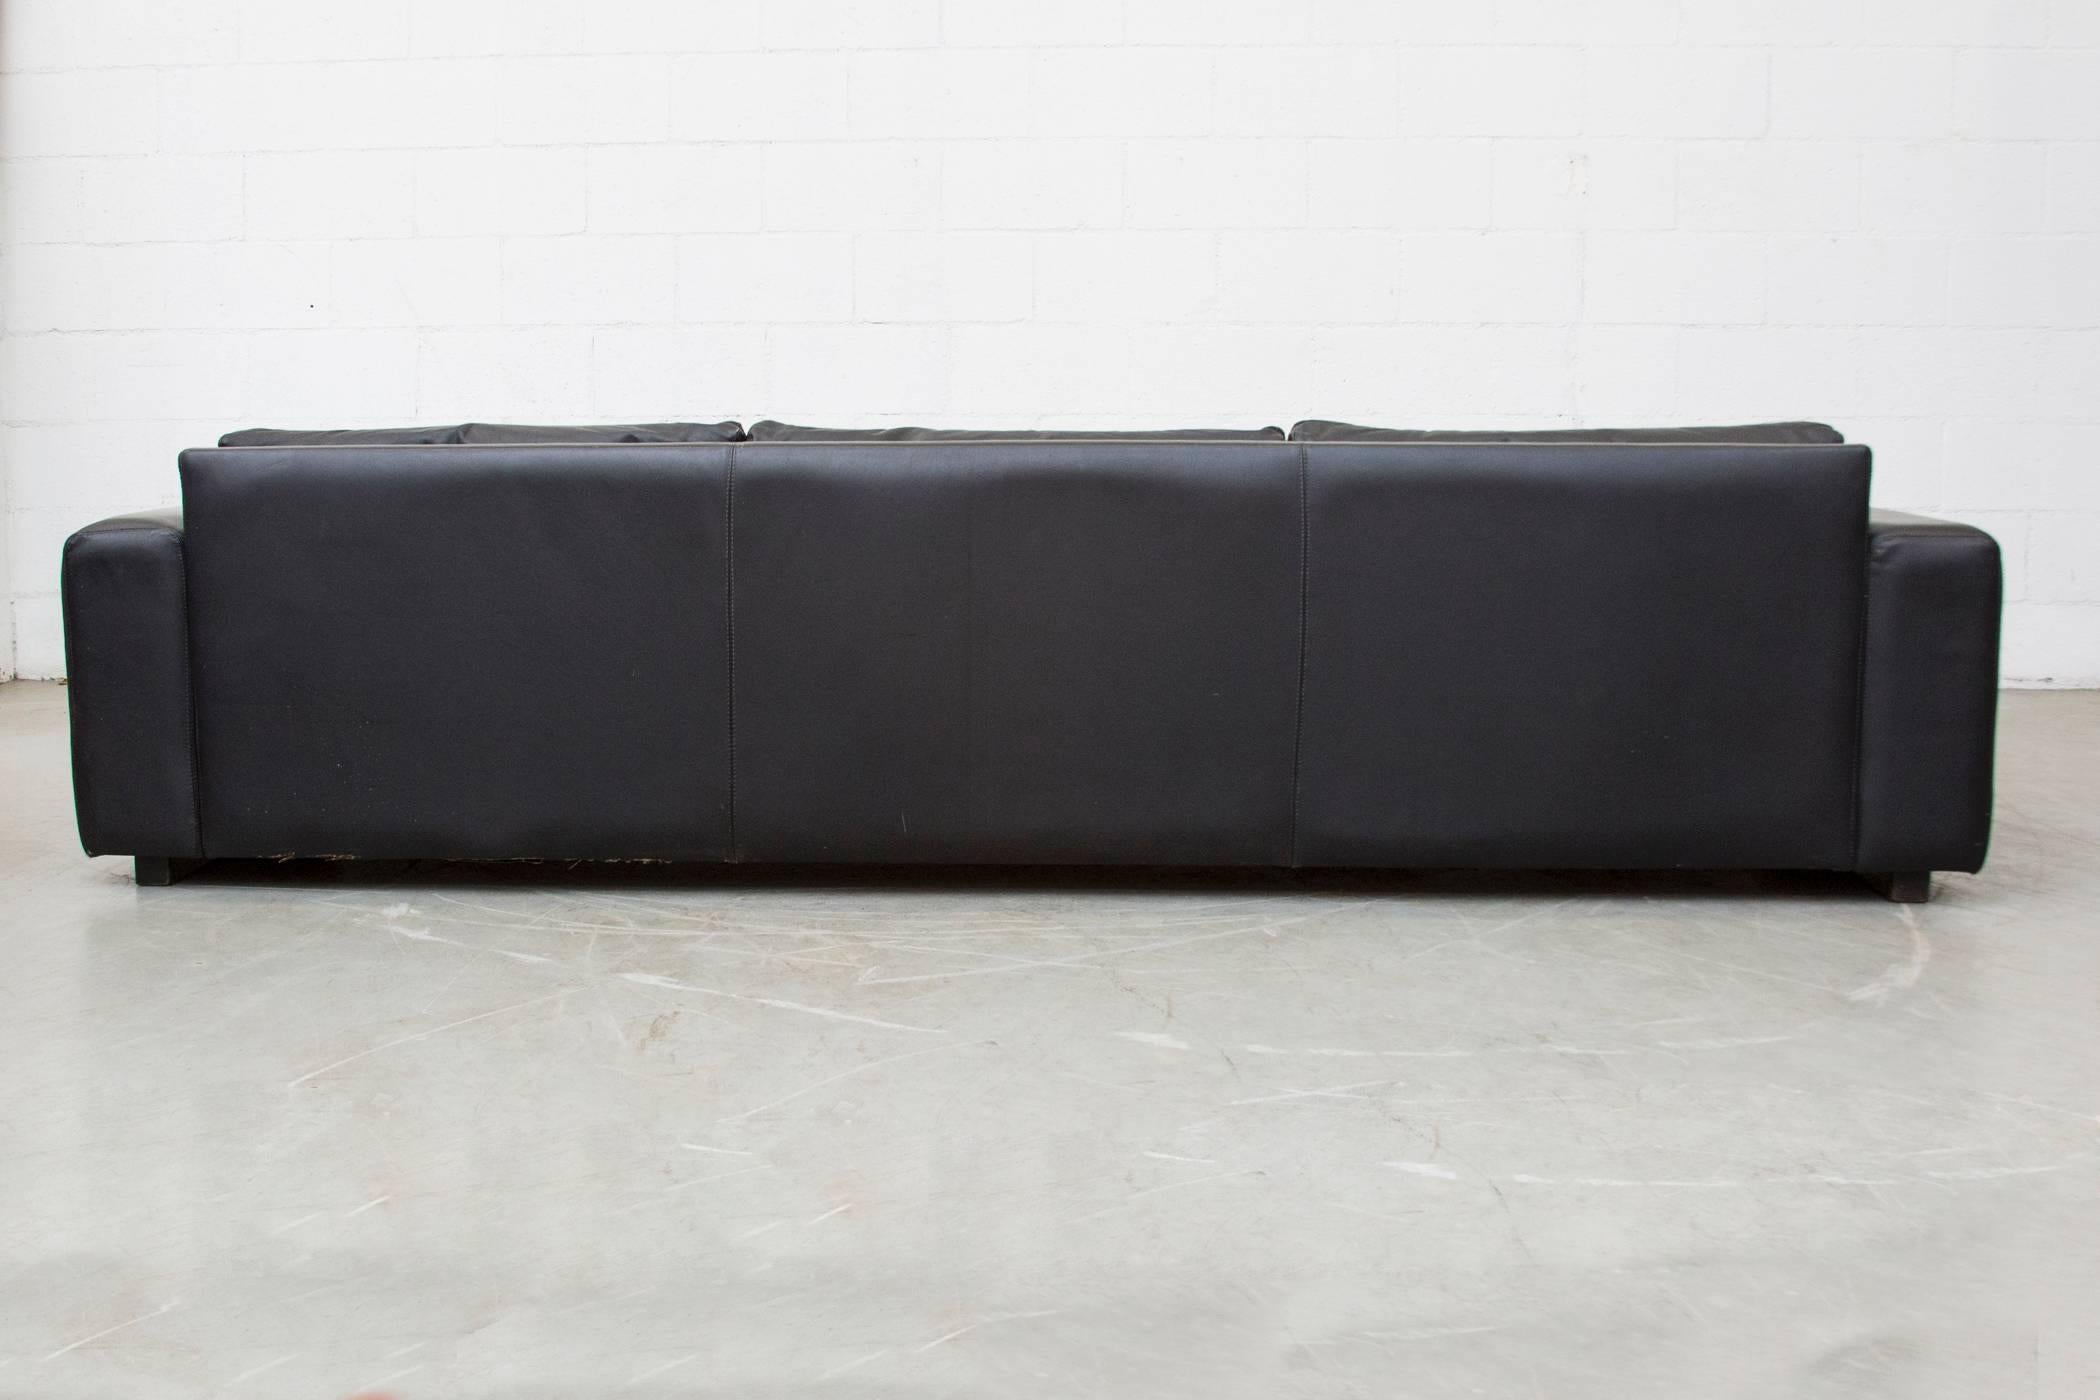 extra long leather sofa